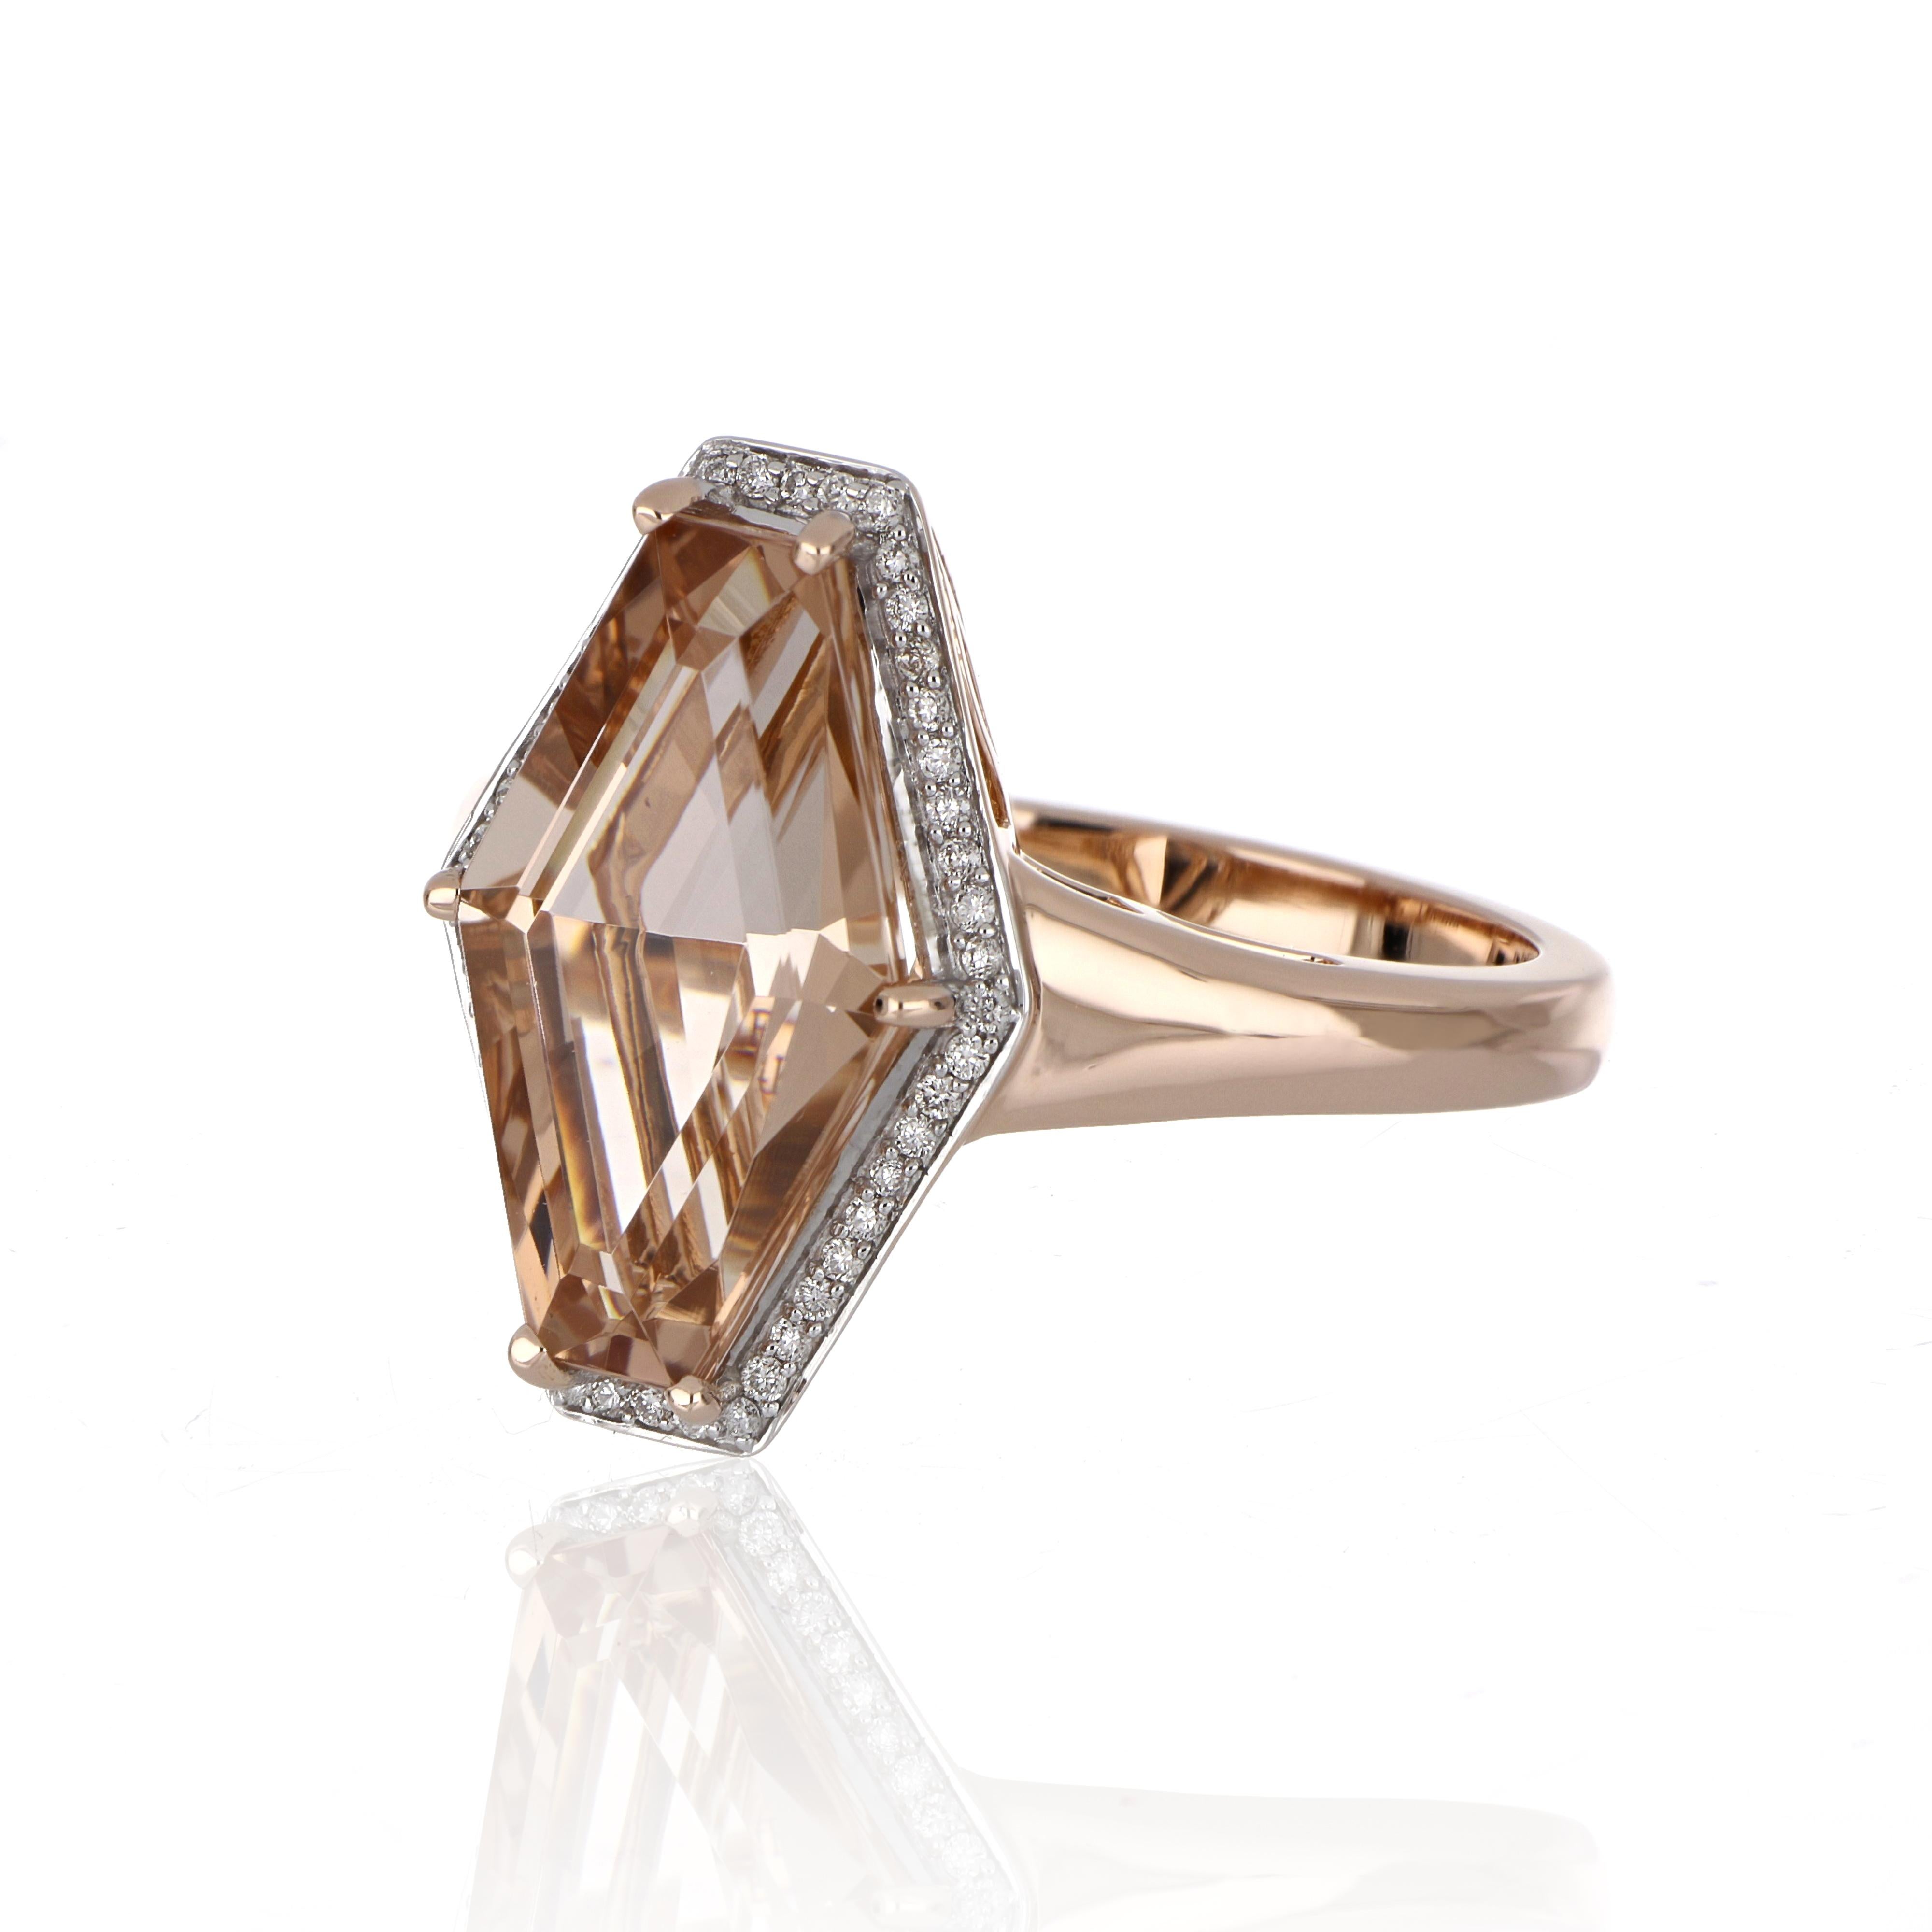 Contemporary 5.13 Carat Morganite Ring with Diamonds in 14 Karat Rose Gold